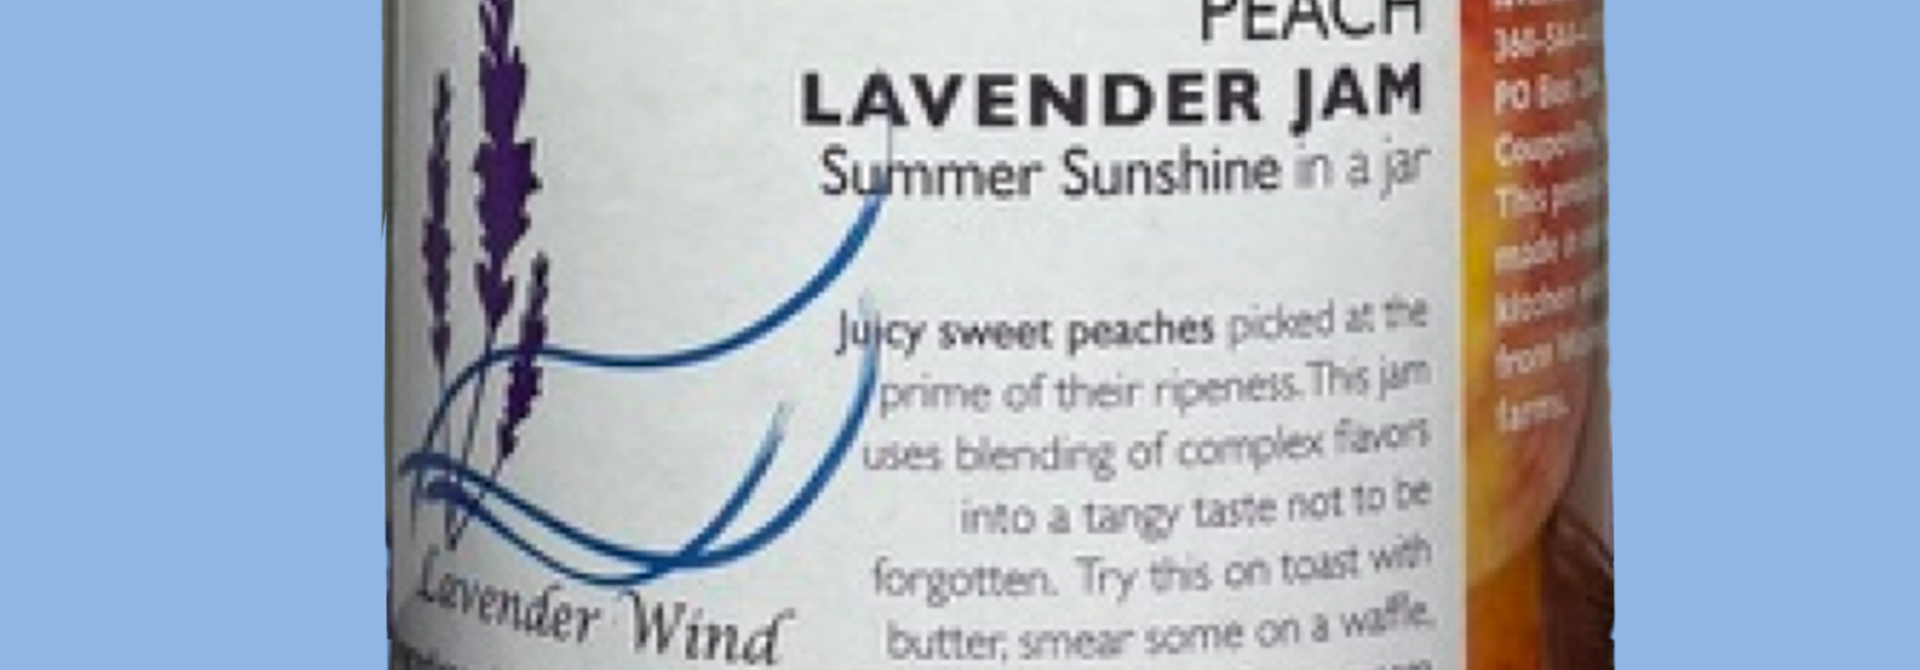 Peach Lavender Jam - 7 oz